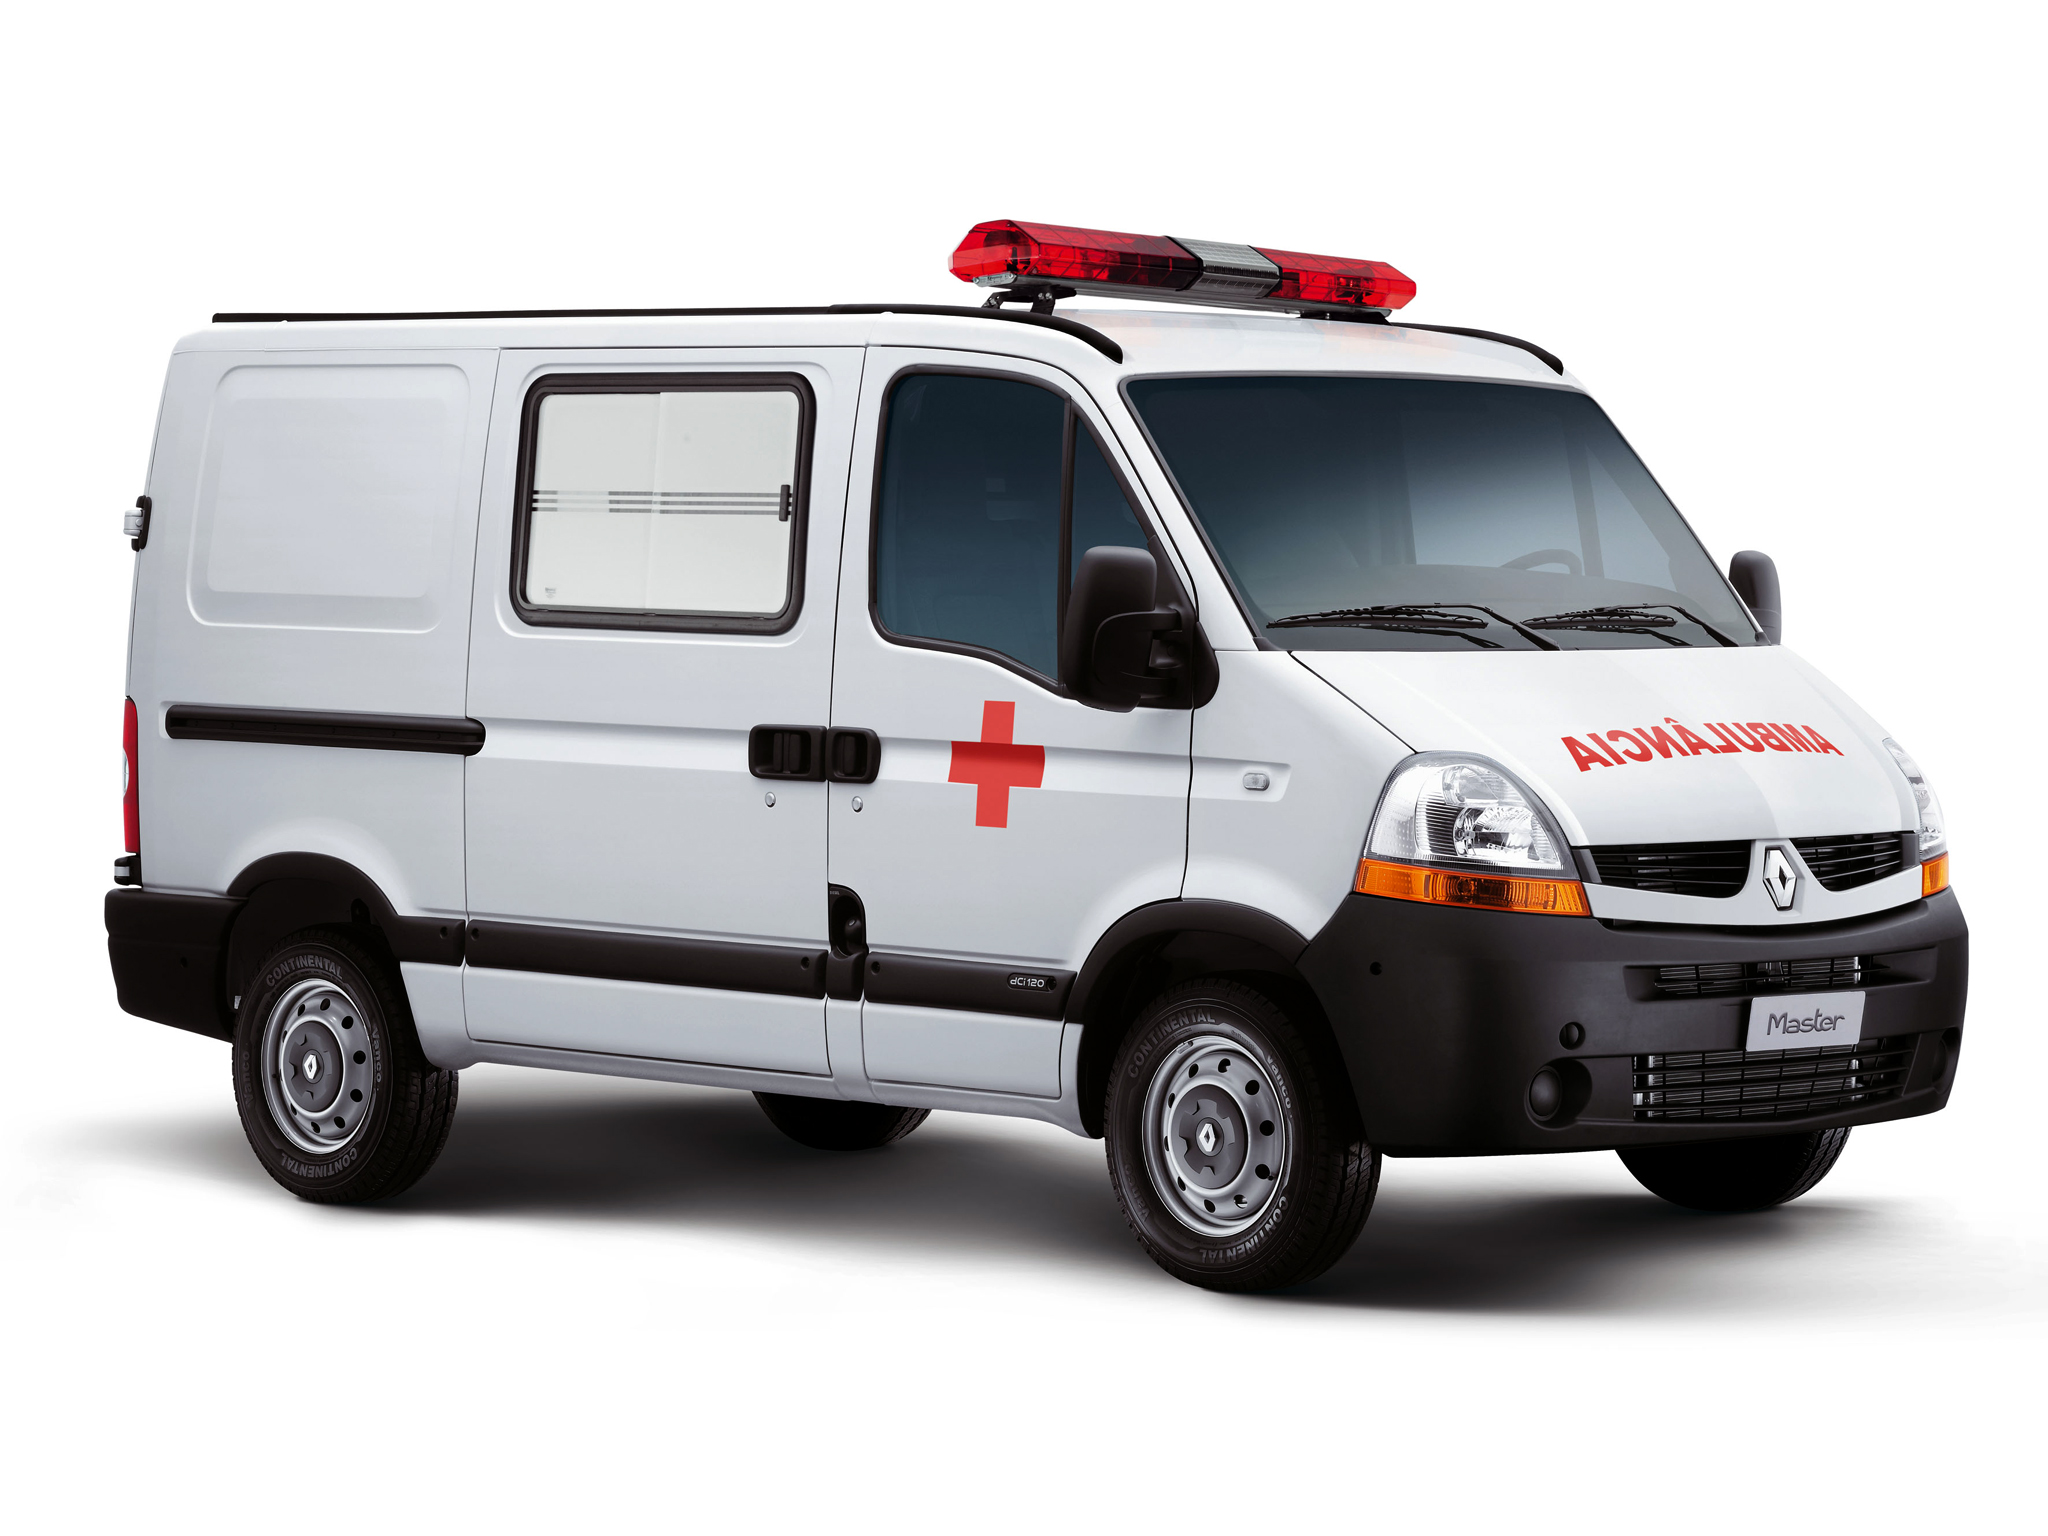 2009, Renault, Master, Ambulancia, Br spec, Emergency, Ambulance Wallpaper